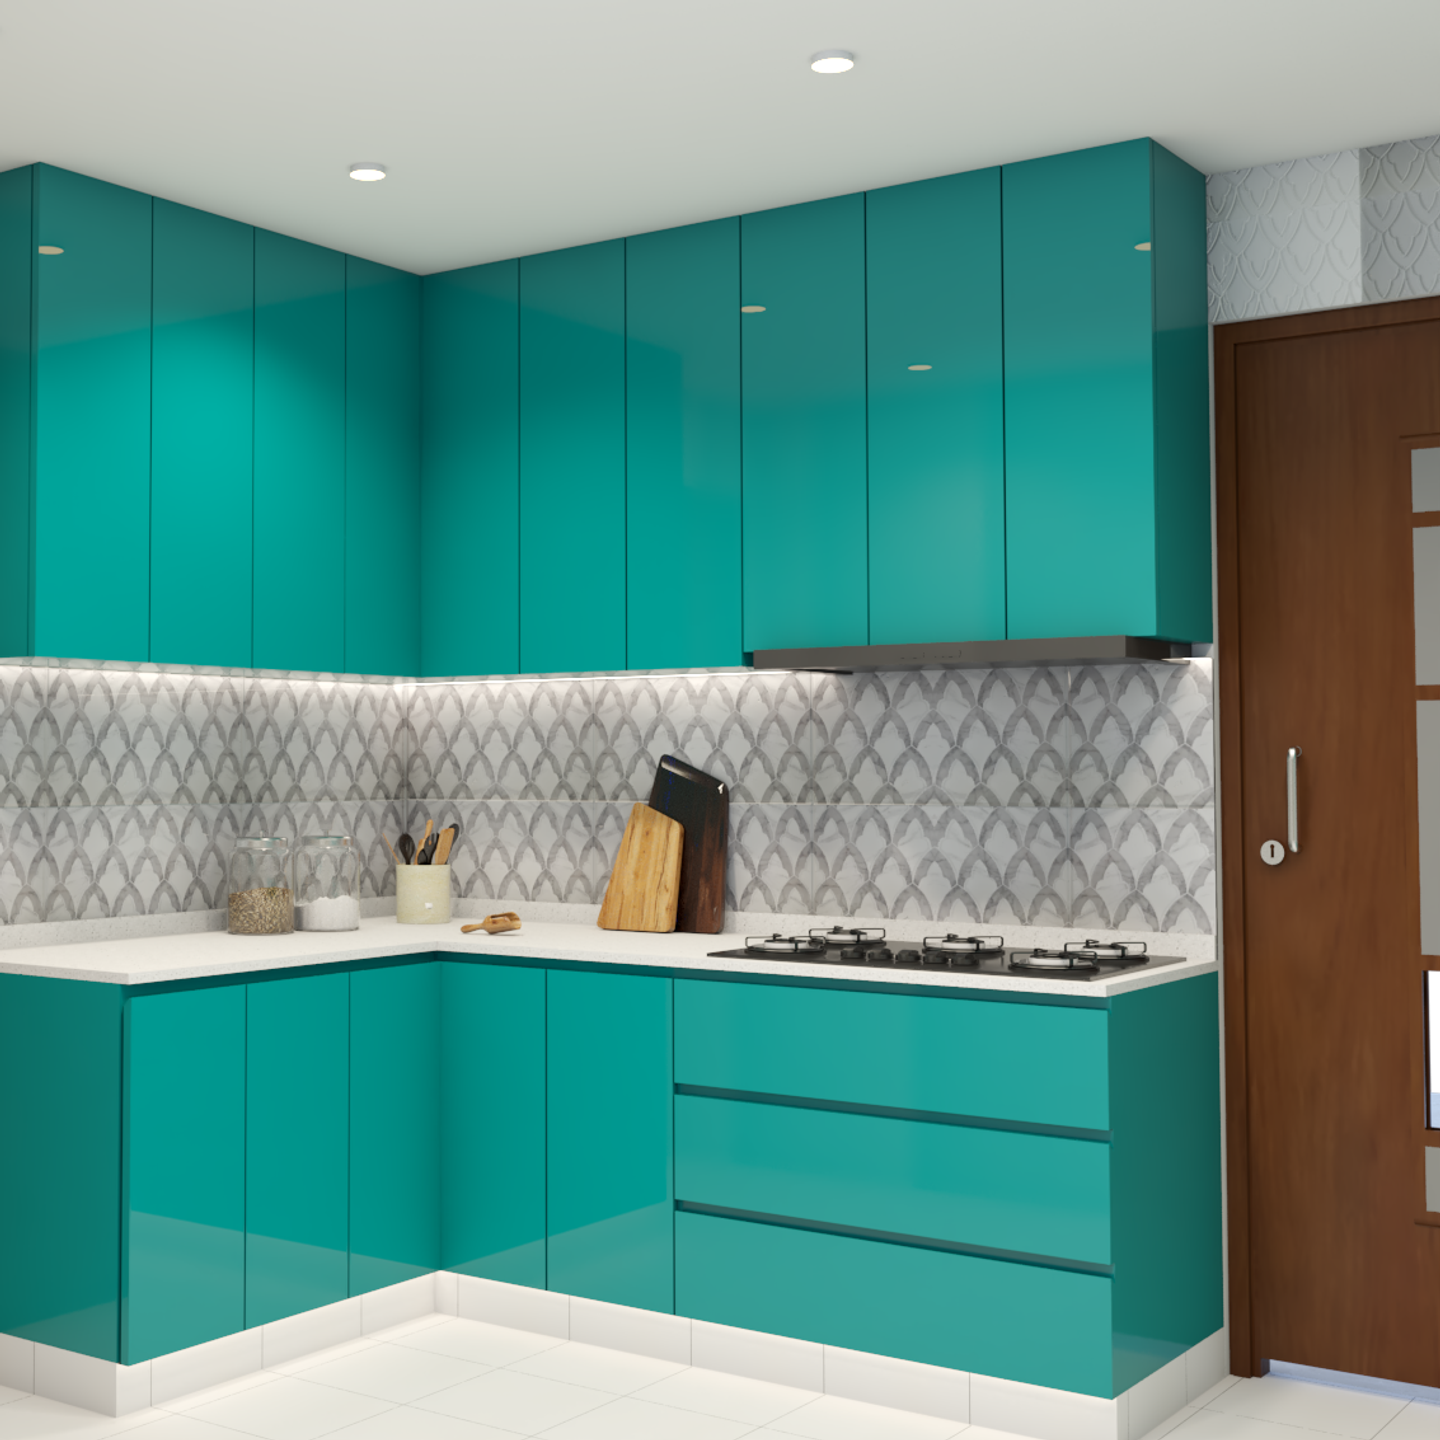 Vibrant Green Kitchen Cabinet Design - Livspace